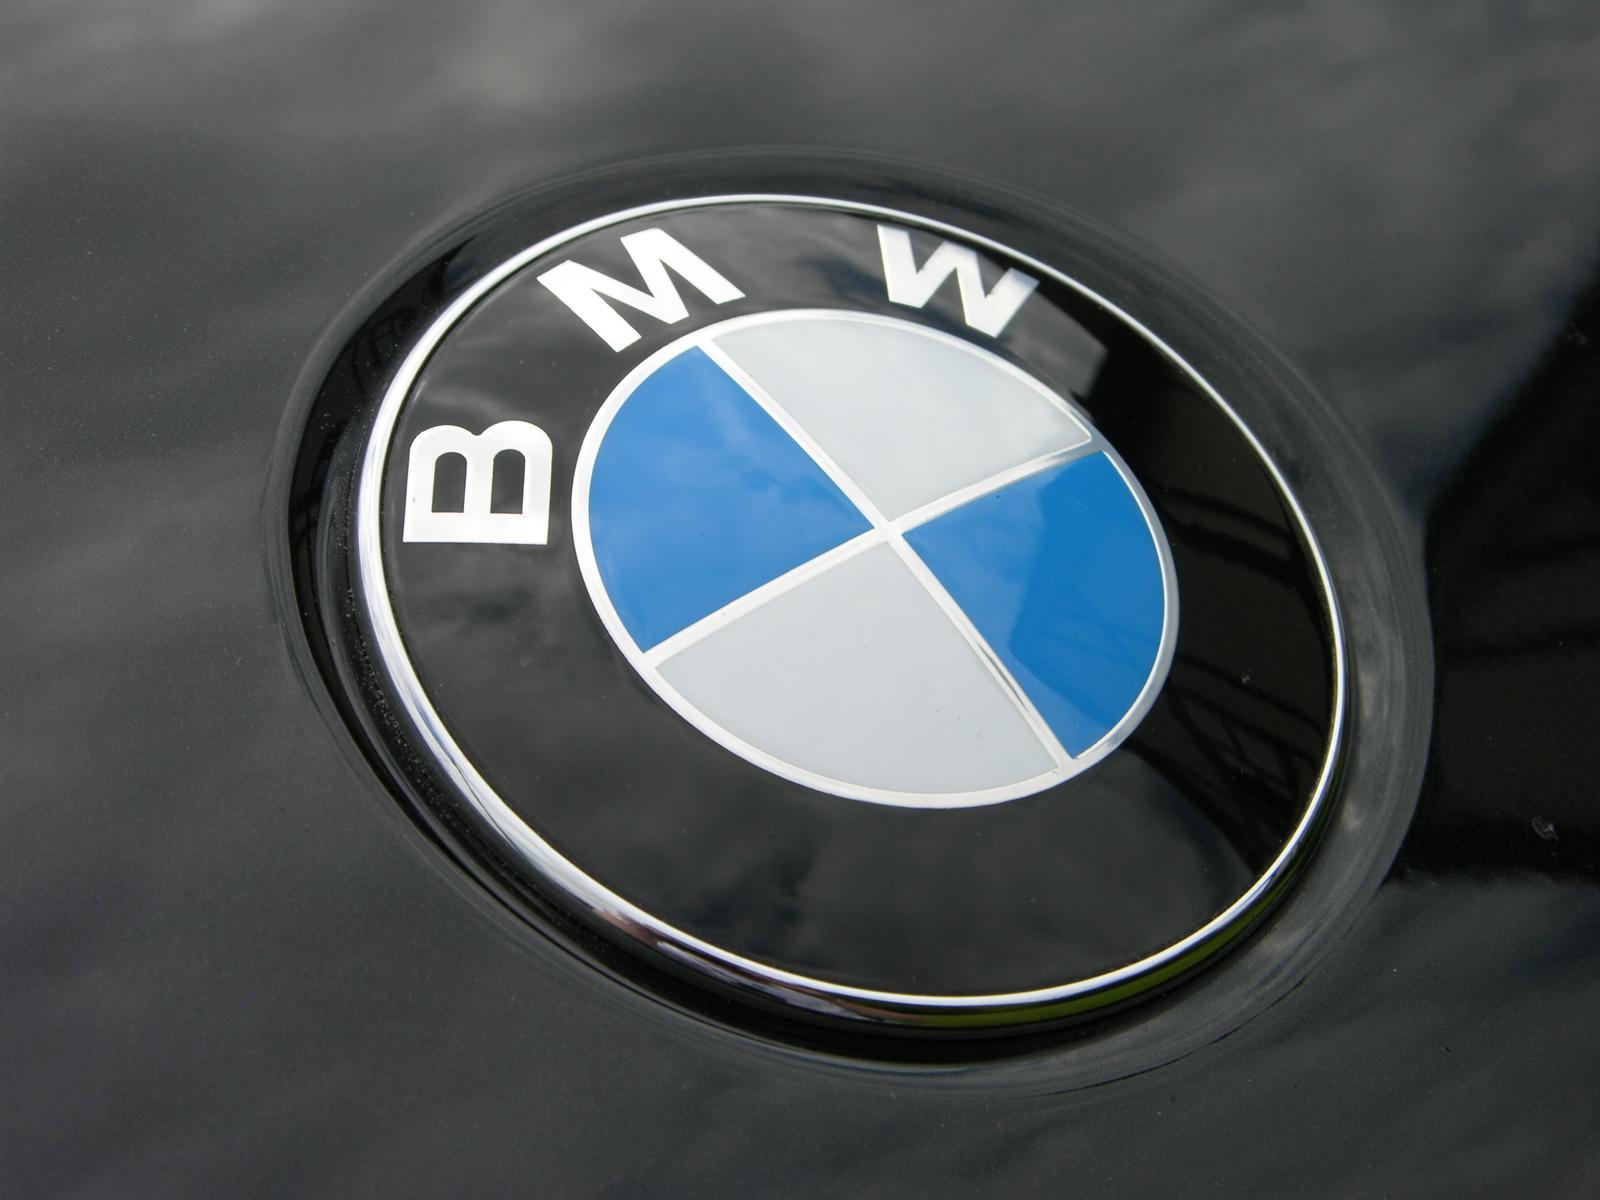 bmw logo wallpaper hd,bmw,logo,emblem,vehicle,personal luxury car